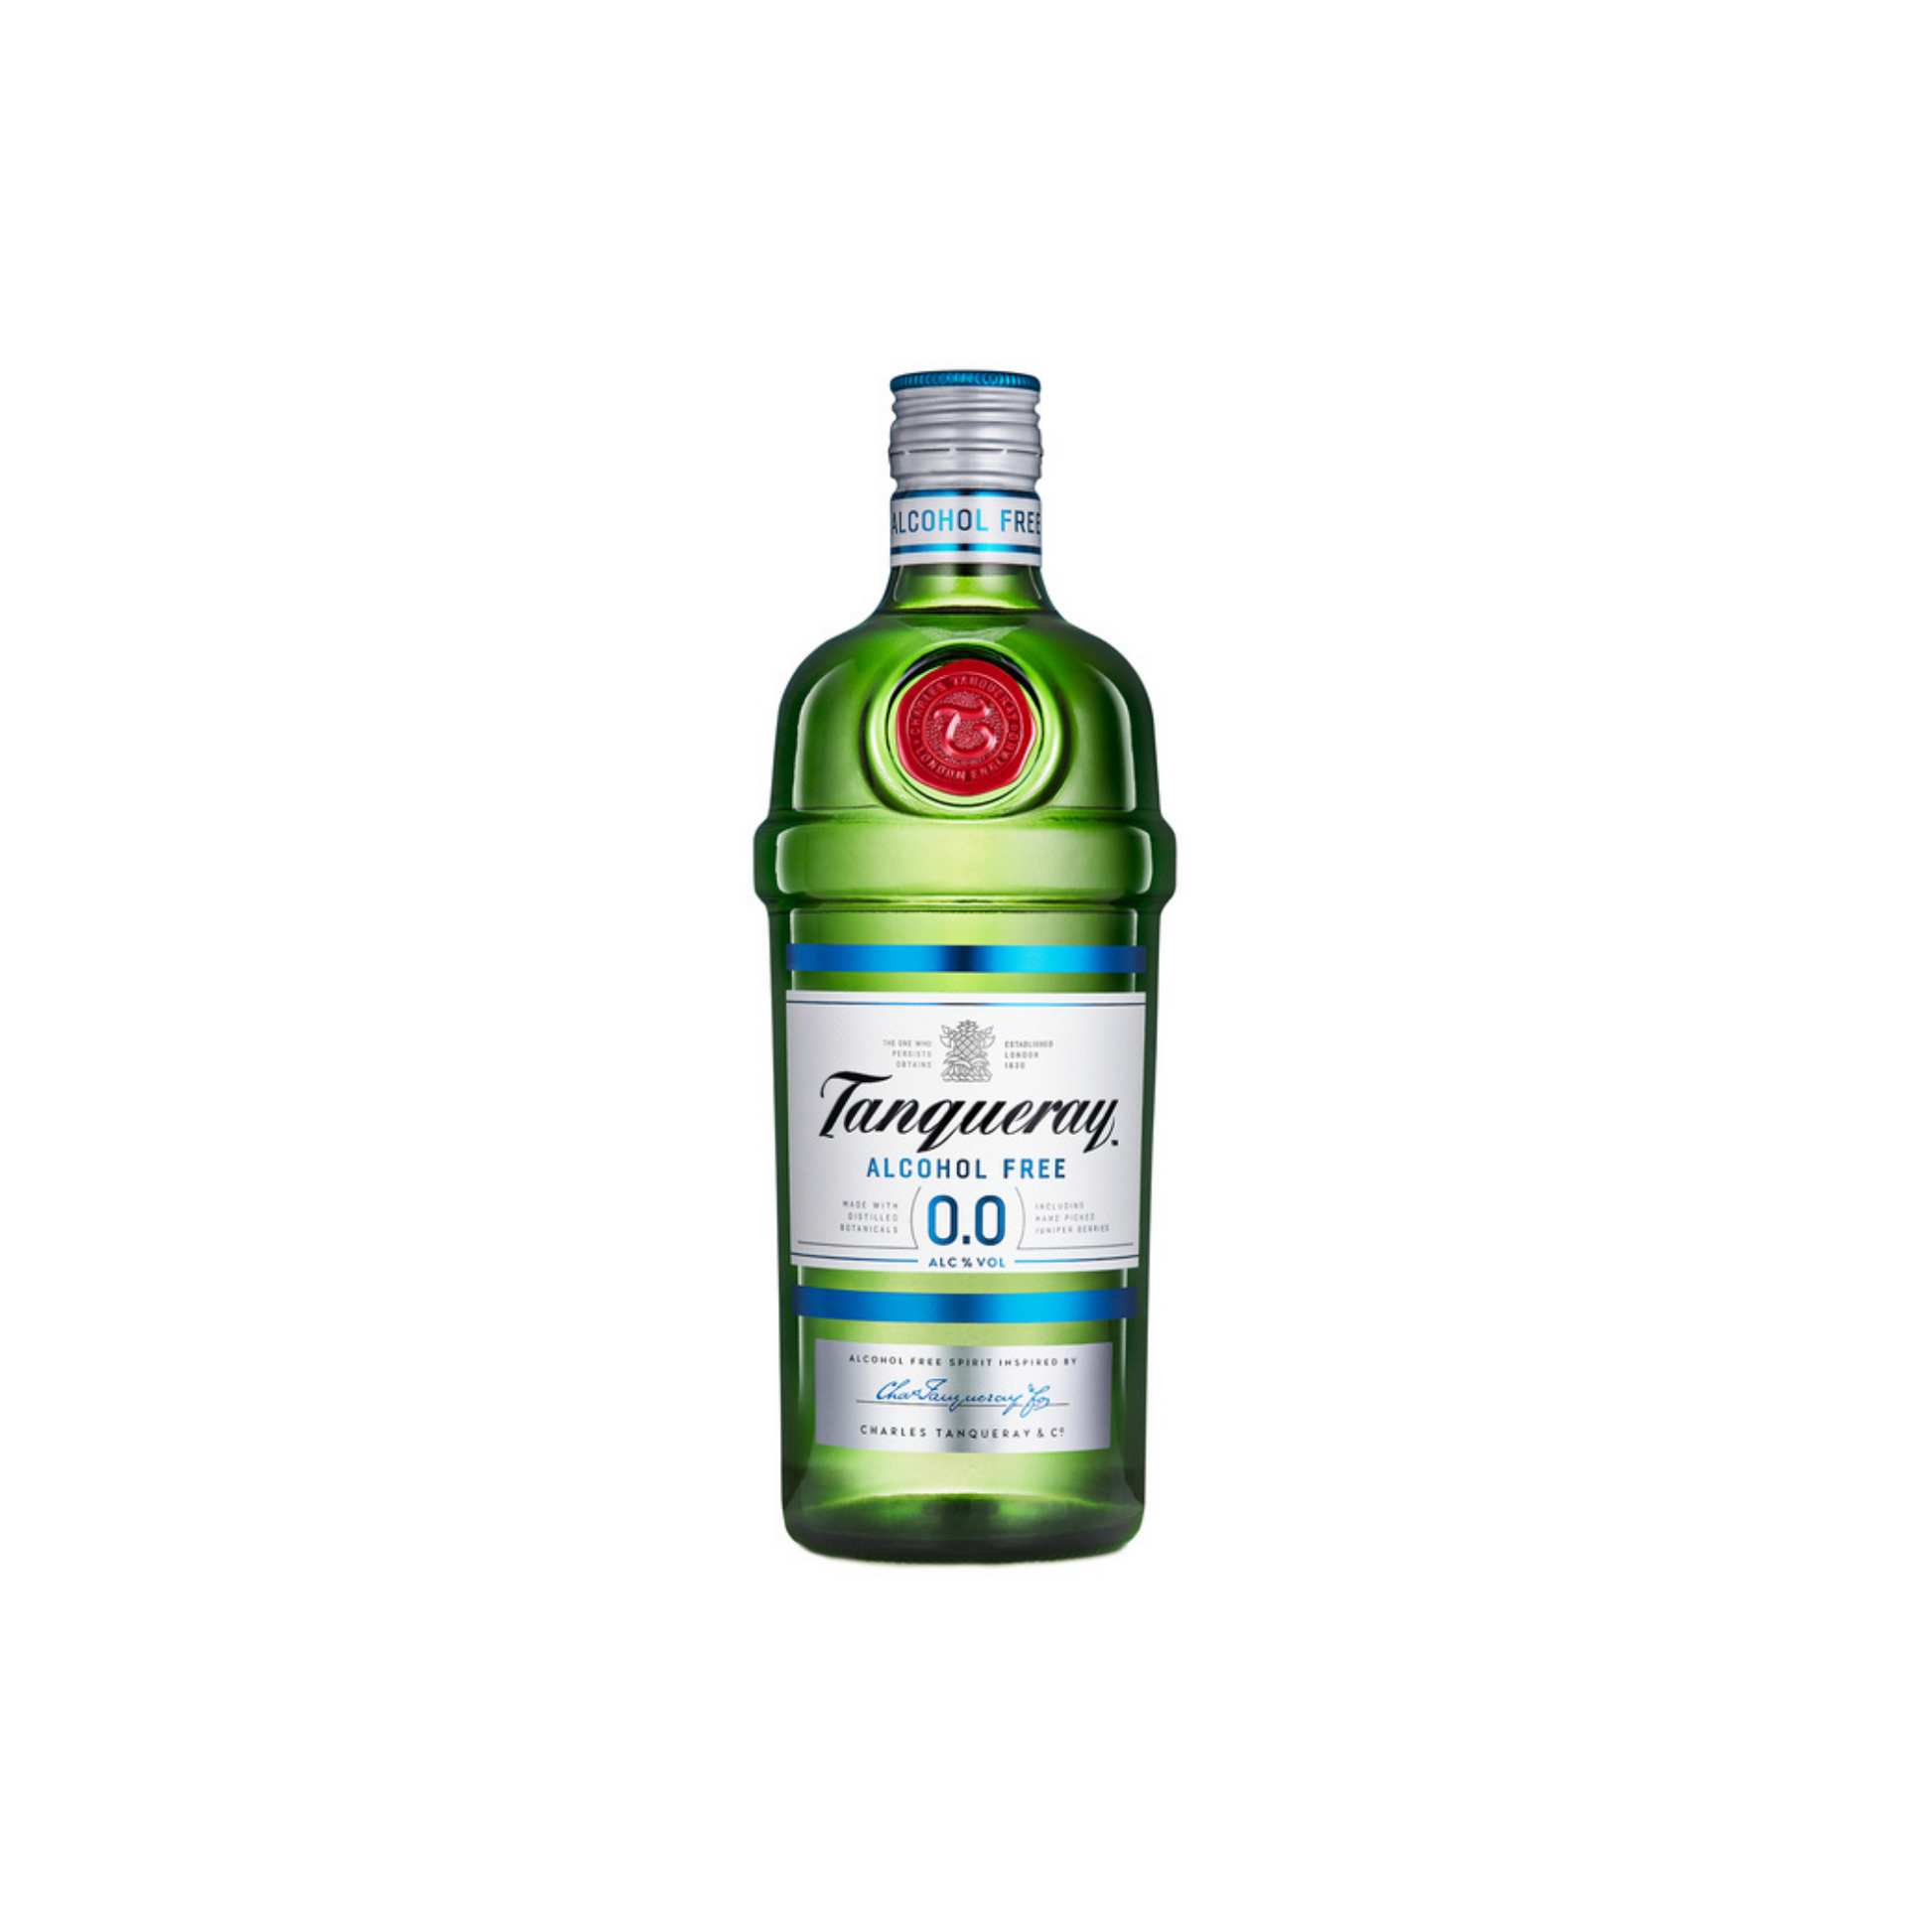 Tanqueray Alcohol Free Spirit 0.0% Gin